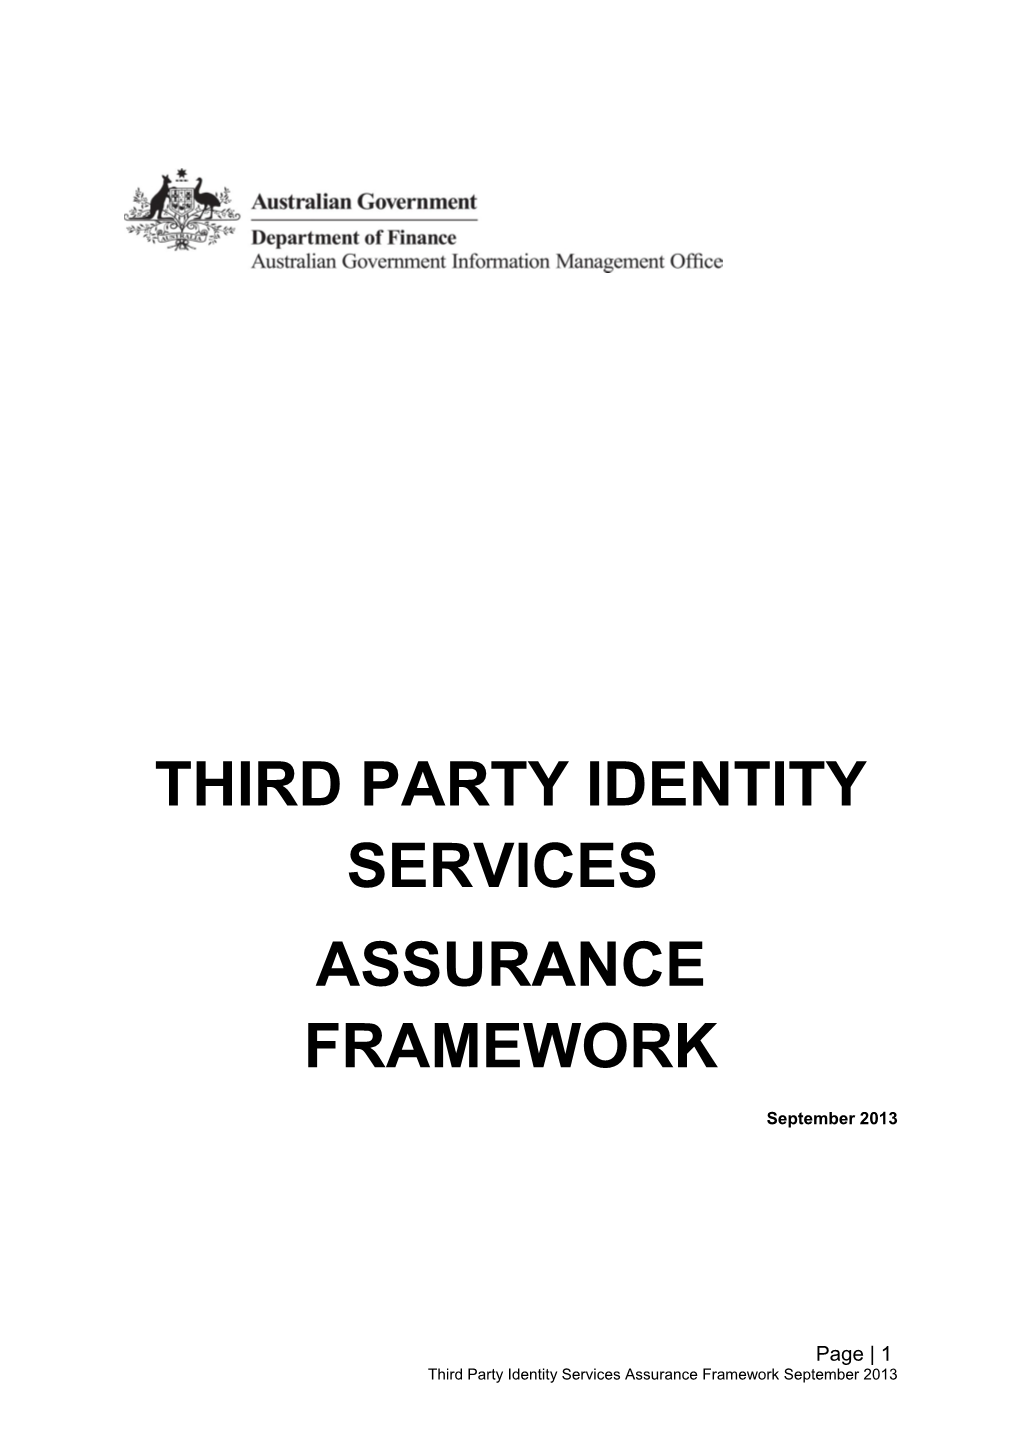 Third Party Identity Services Assurance Framework